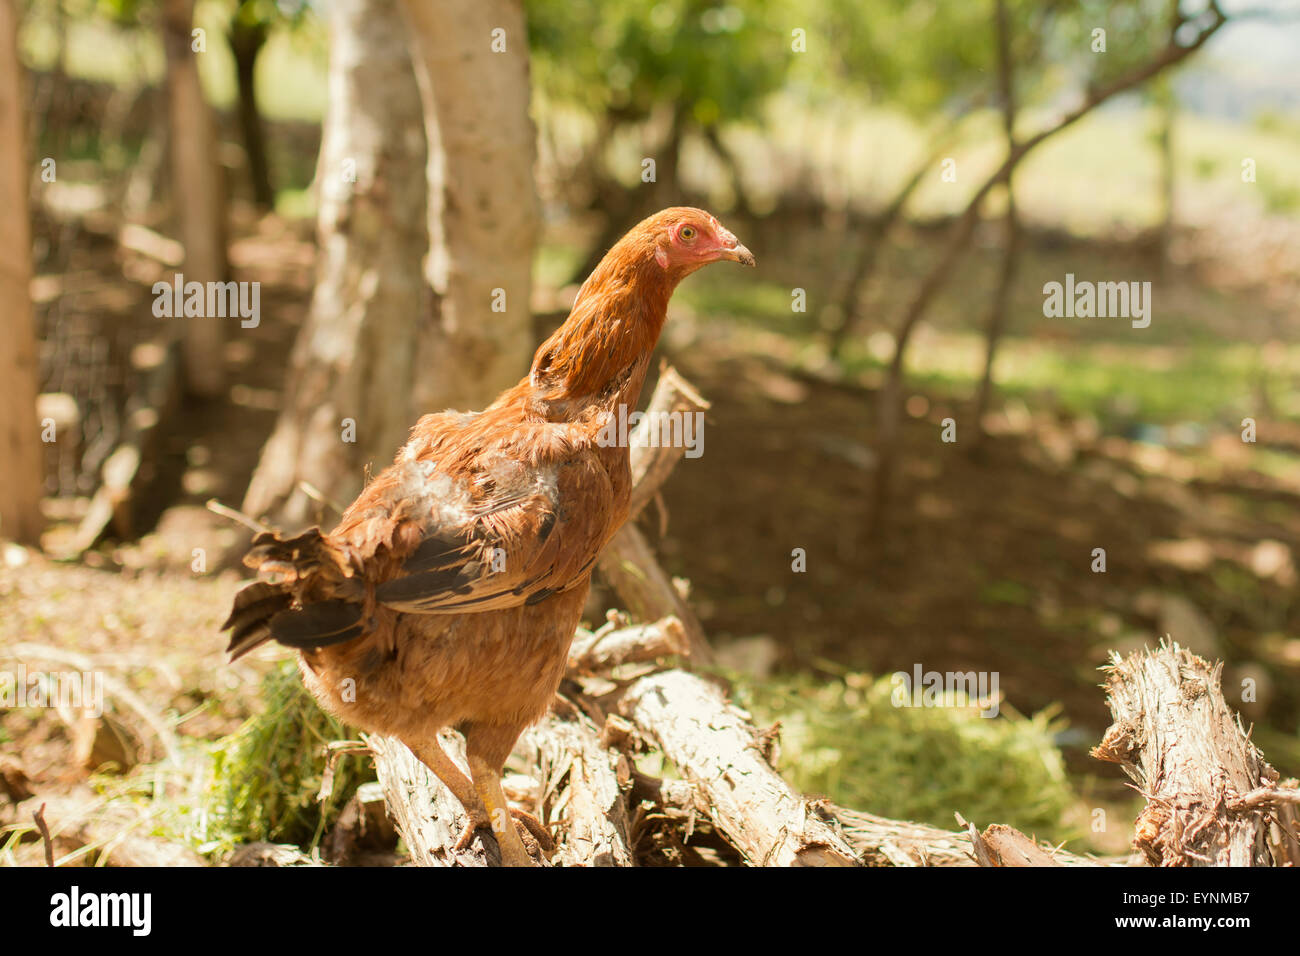 brown hen image in the garden, Stock Photo